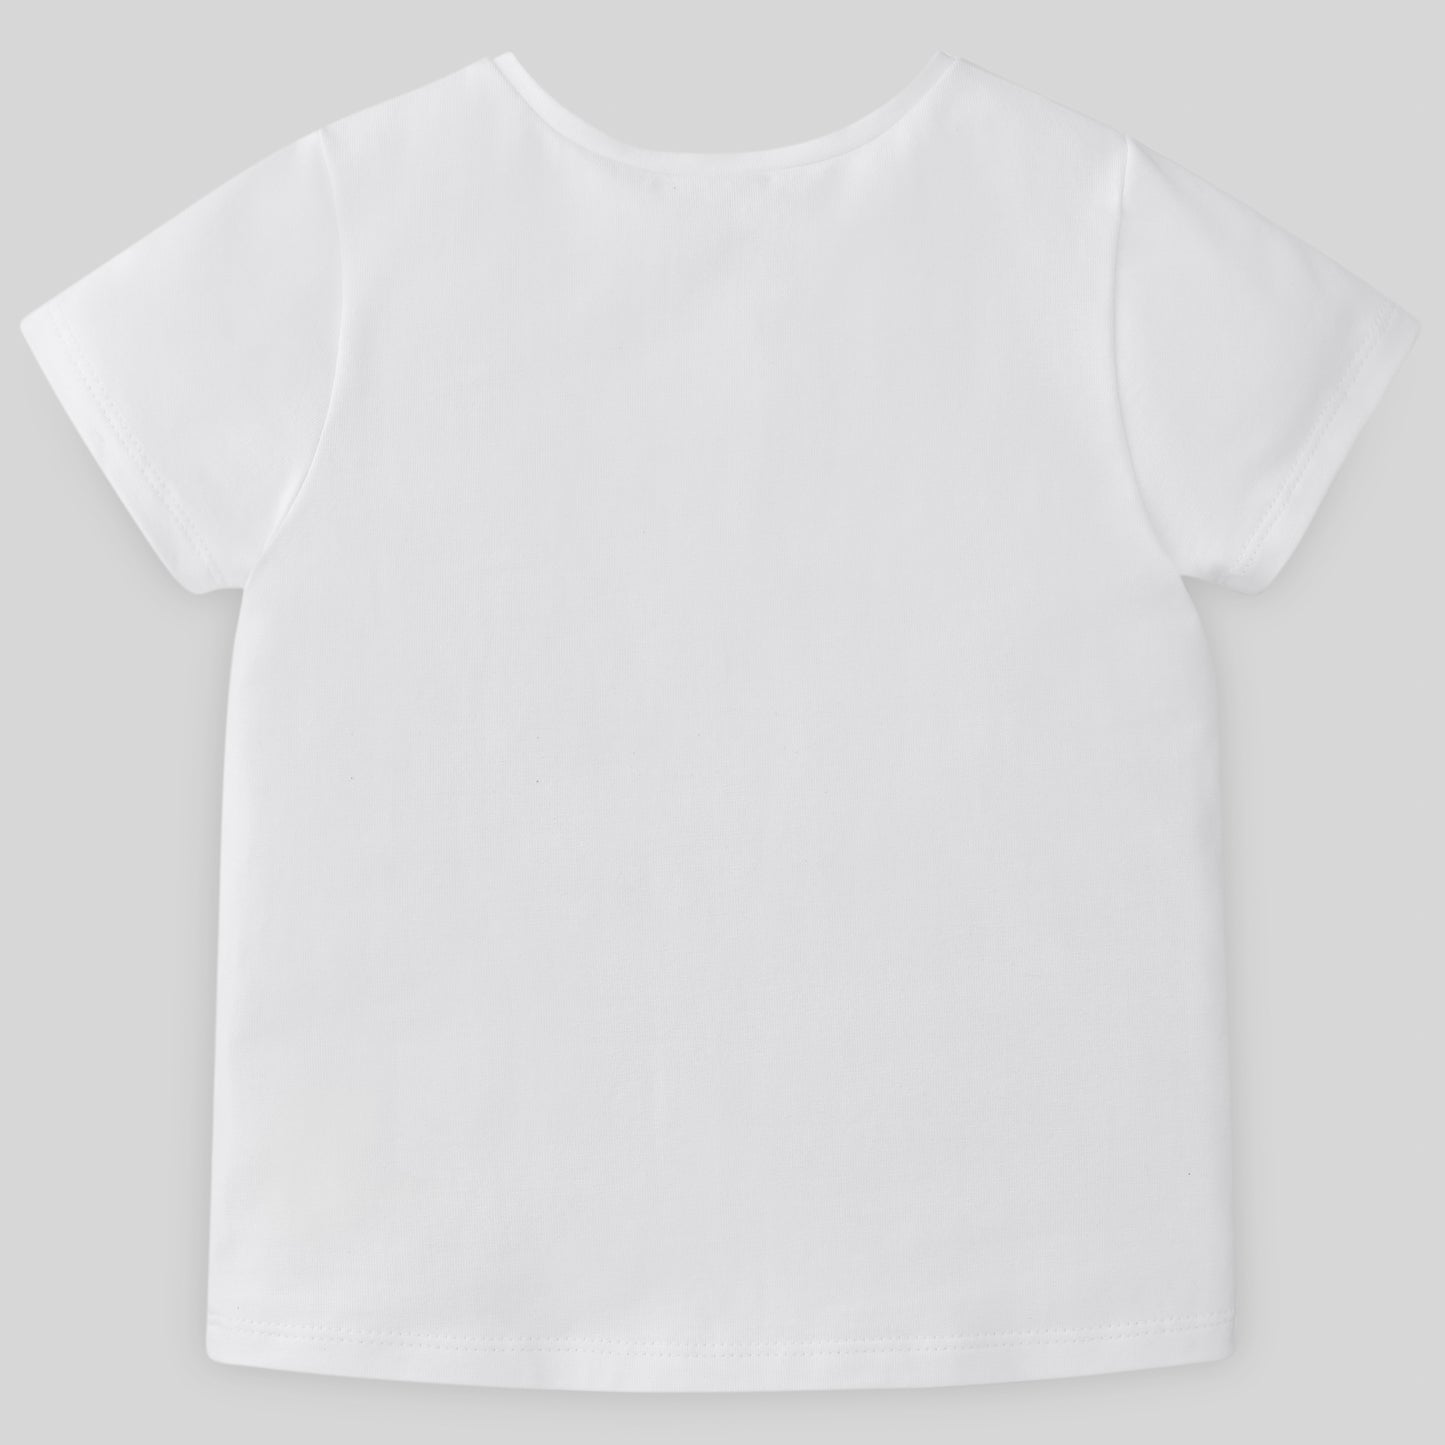 PAZ RODRIGUEZ T-shirt bianca stampa gelati